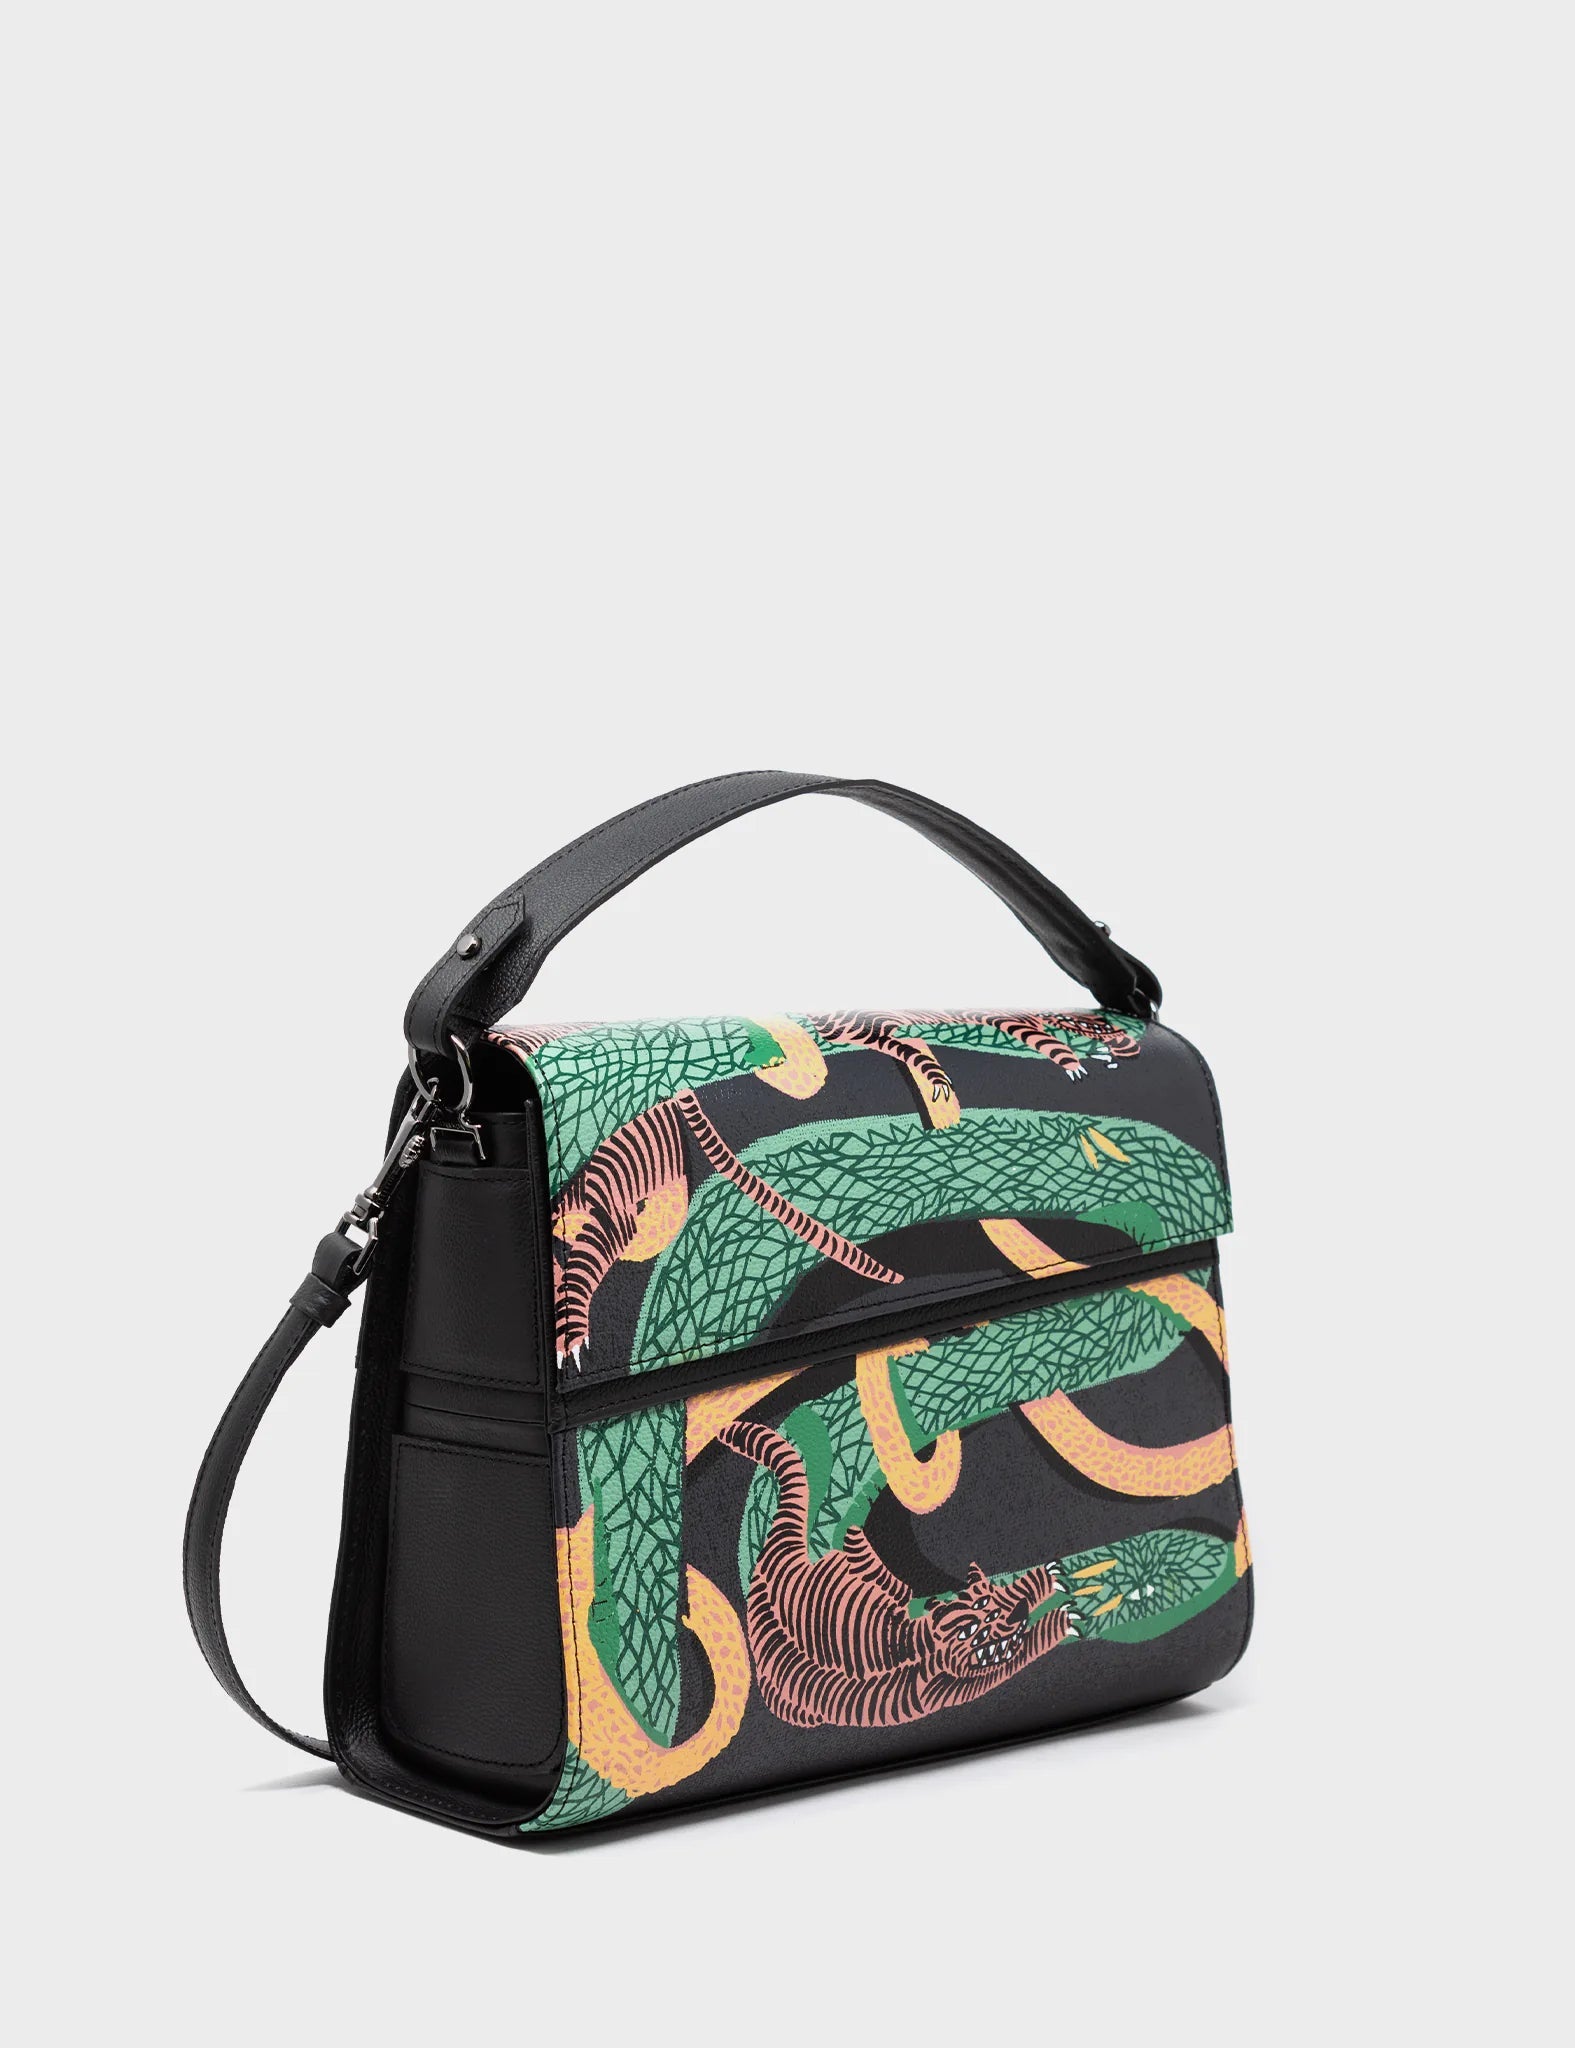 Medium Crossbody Handbag Black Leather - Tiger And Snake Print - Front corner angle view